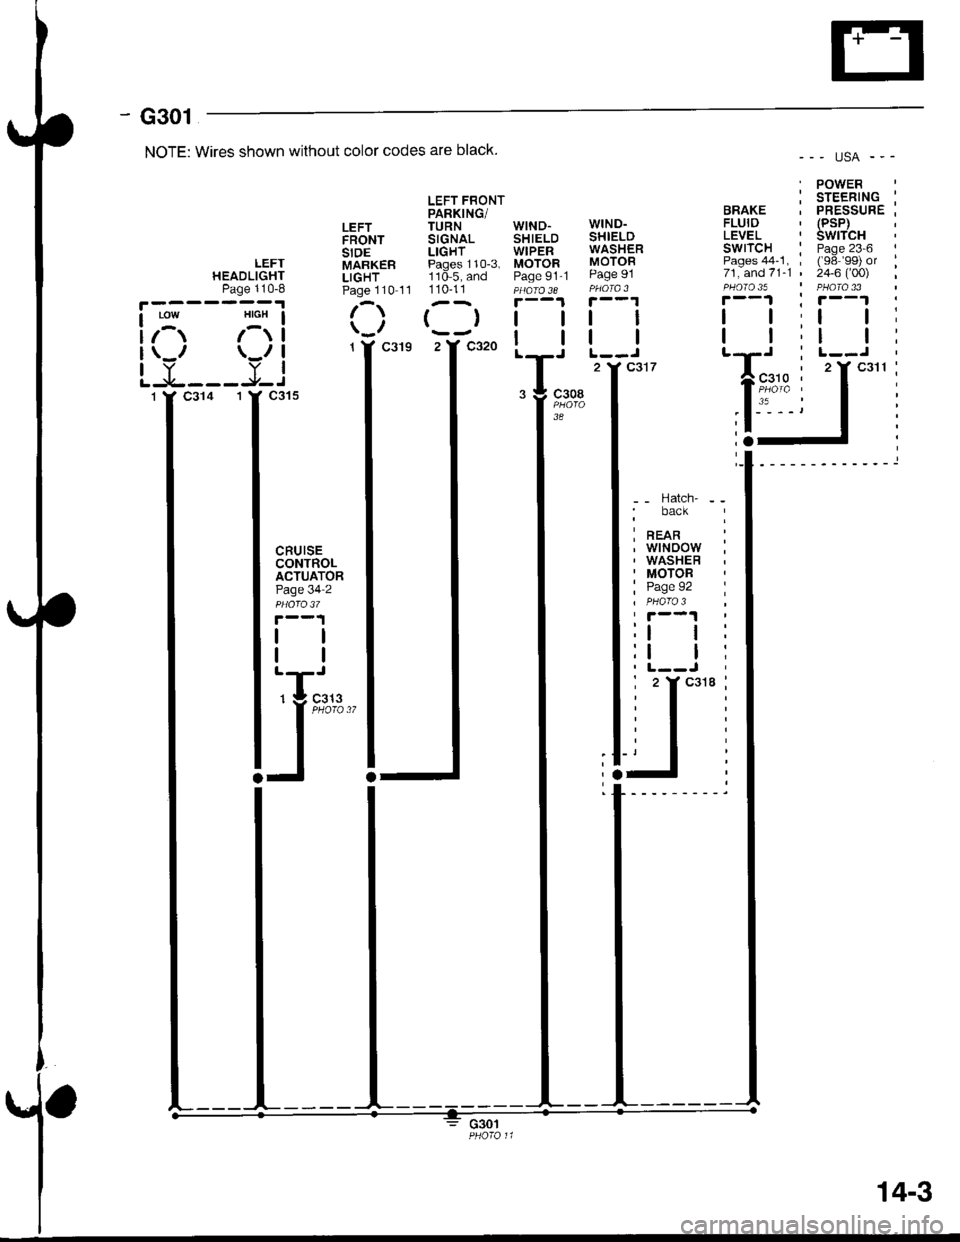 HONDA INTEGRA 1998 4.G Owners Manual - G301
NOTE: Wires shown without color codes are black.
LEFT FBONTPARKING/LEFT TURN WIND.FRONT SIGNAL SHIELDSIDE LIGHT WIPER
()l
2Y c320 |
--- usA ---
. POWERi sreentlc :BRAKE . PRESSURE ;FLUID  (PsP